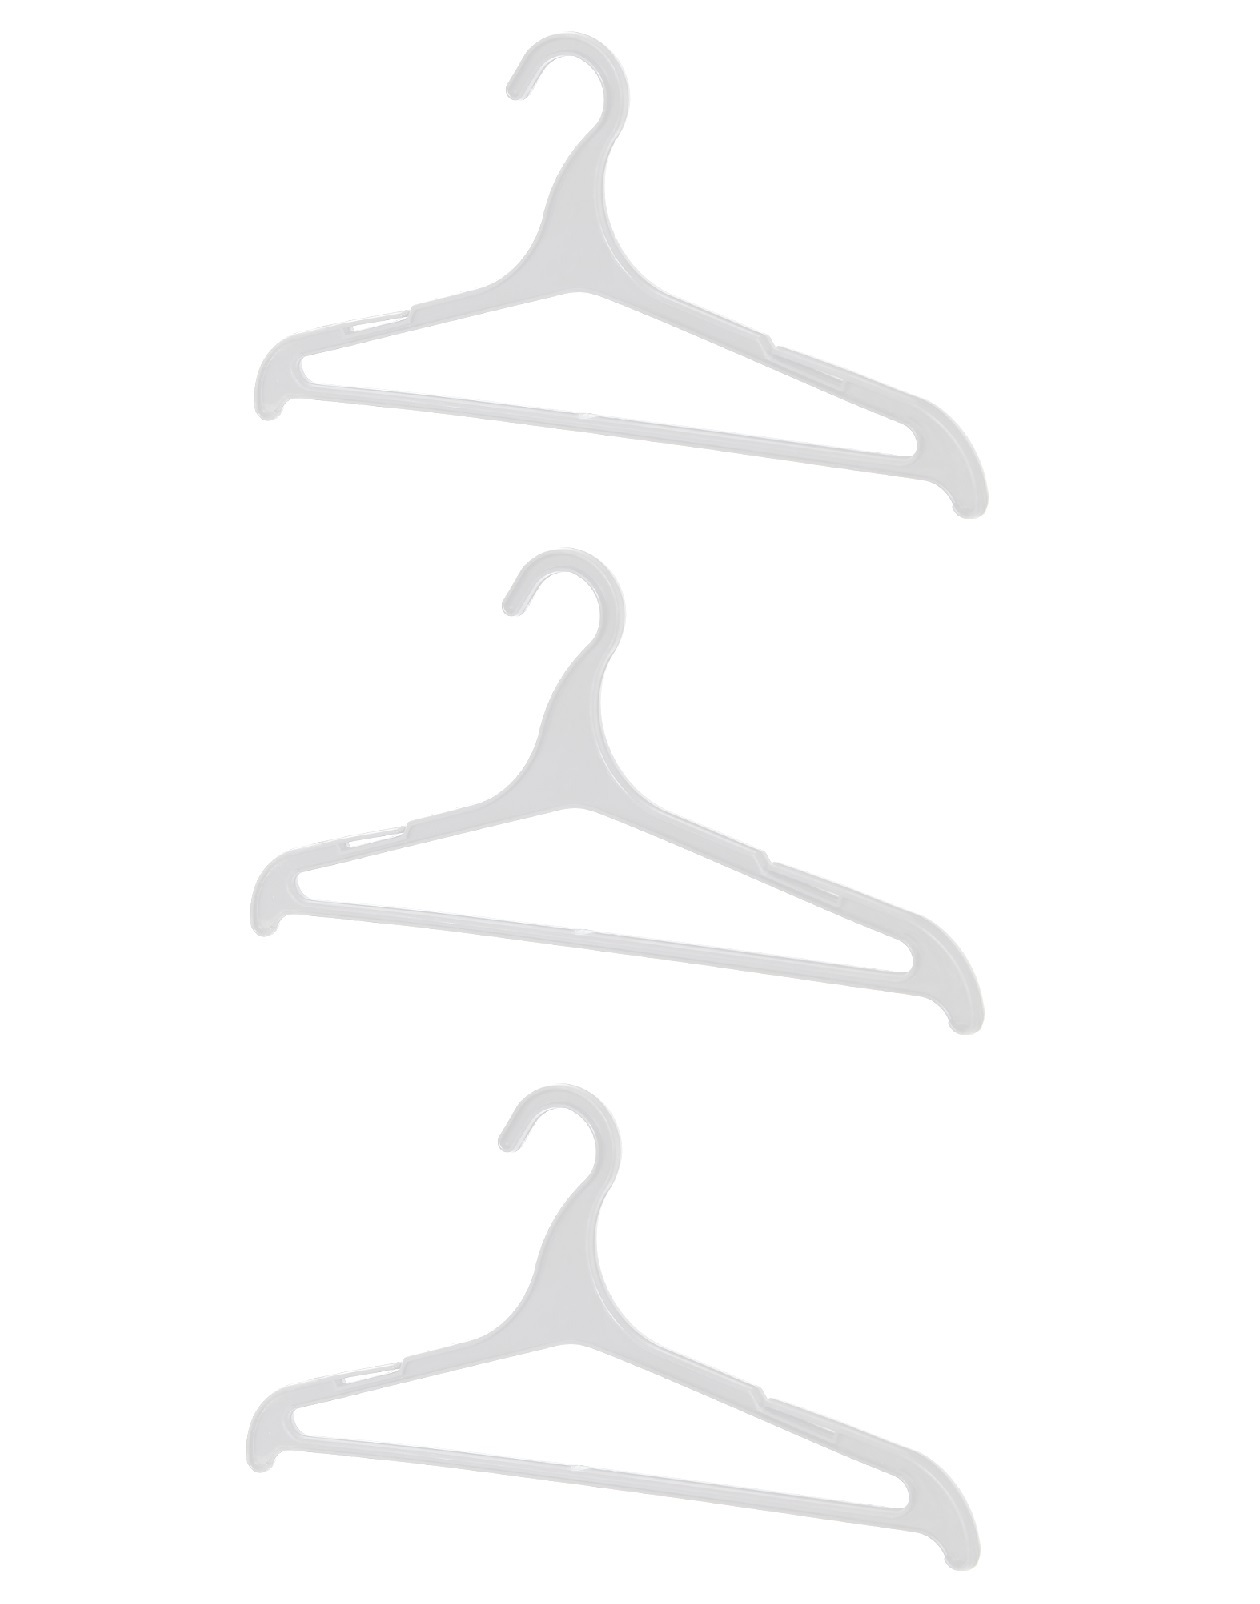 фото Вешалка костюмная valexa вл-1 430мм х 10мм, белая, набор 3 шт